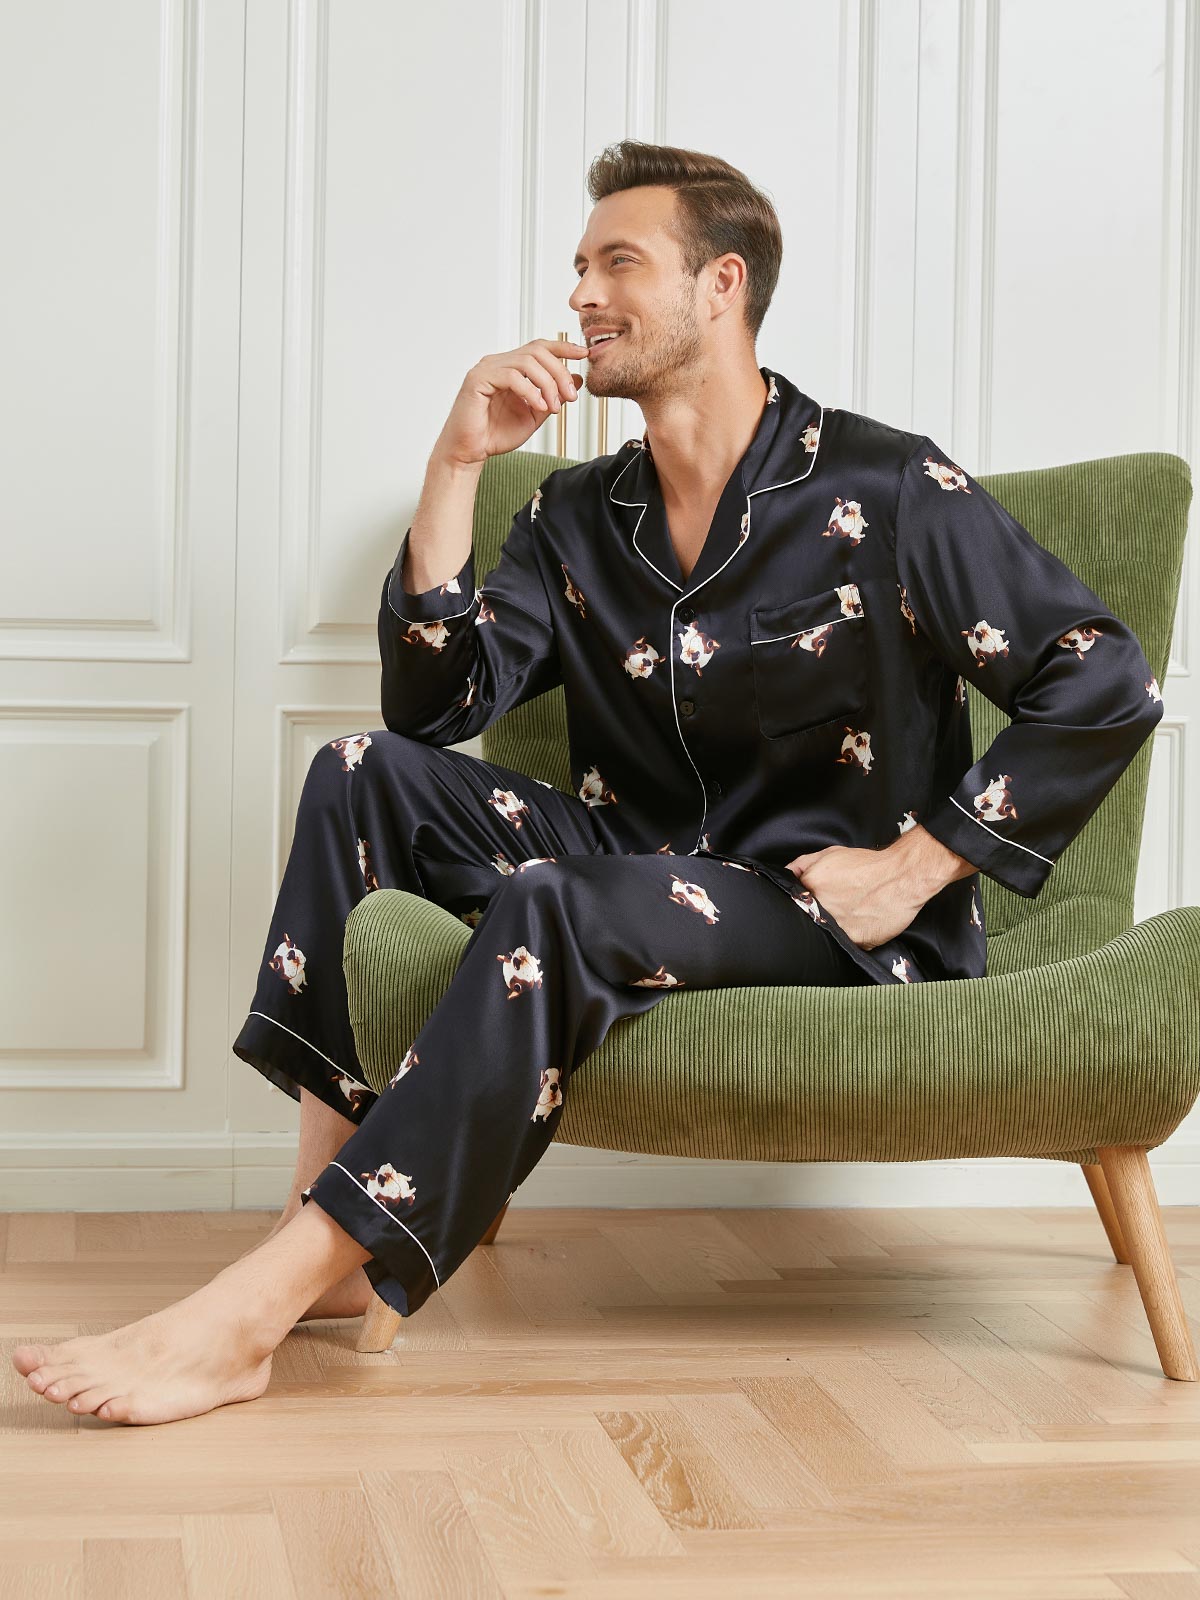 2Pcs Pure Silk Dog Pattern Button Up Mens Pyjamas